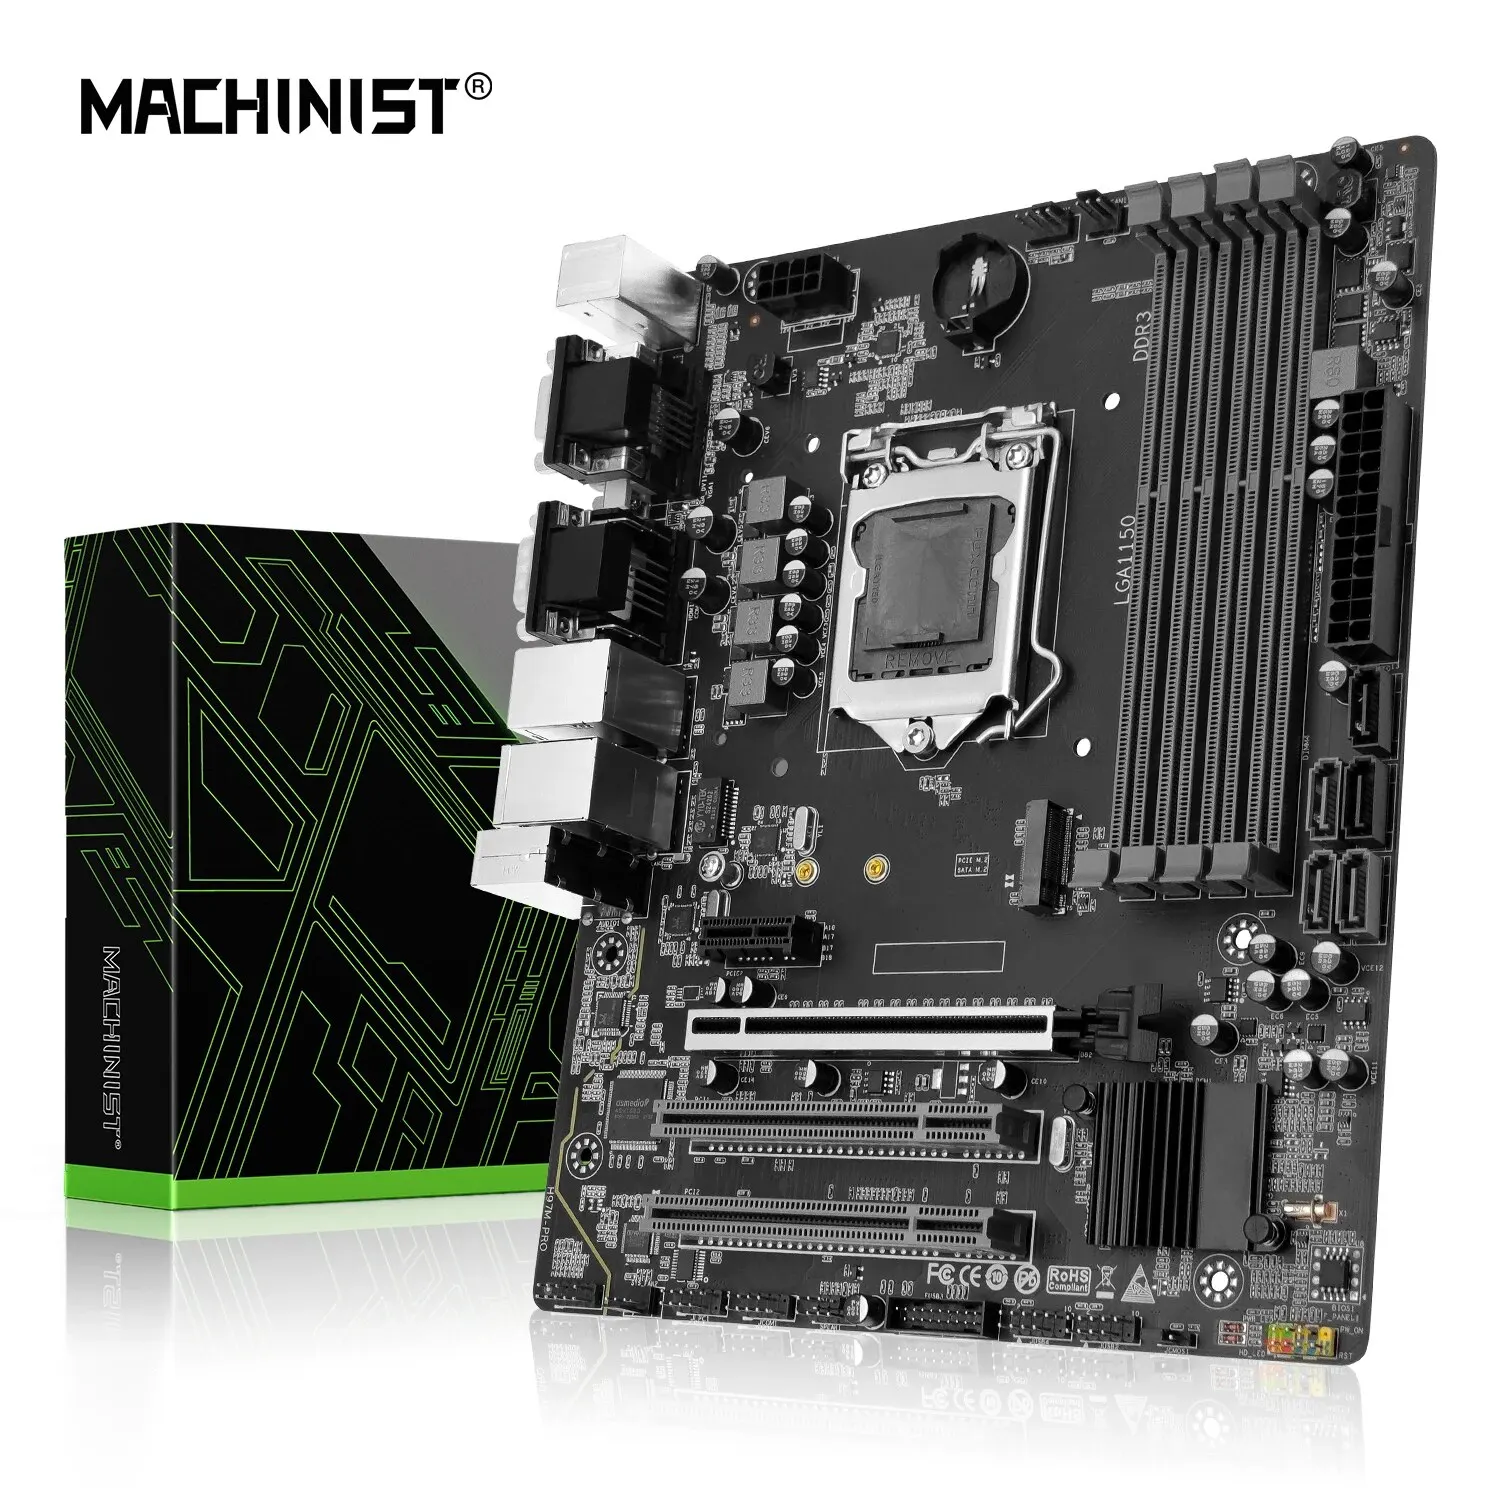 Maschinist h97m pro lga 3,0 Motherboard M-ATX Unterstützung DDR3 RAM Intel Core i3 i5 i7 e3 CPU Sata 3,0 USB NVME NGFF M.2